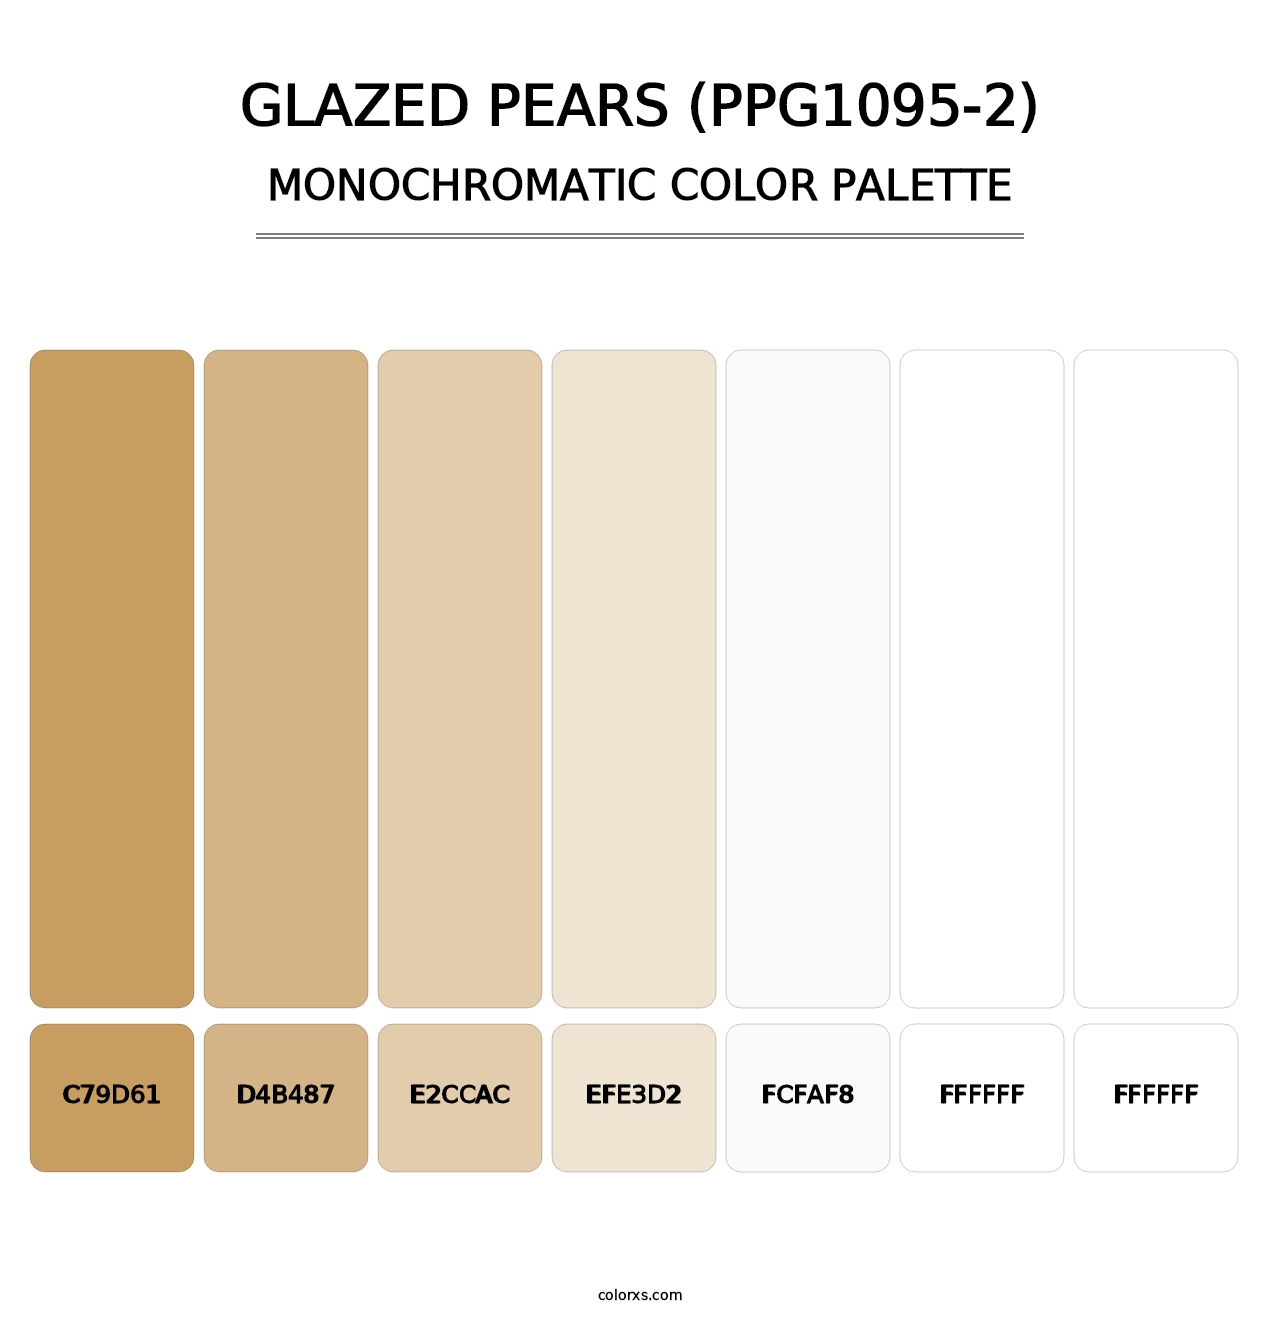 Glazed Pears (PPG1095-2) - Monochromatic Color Palette